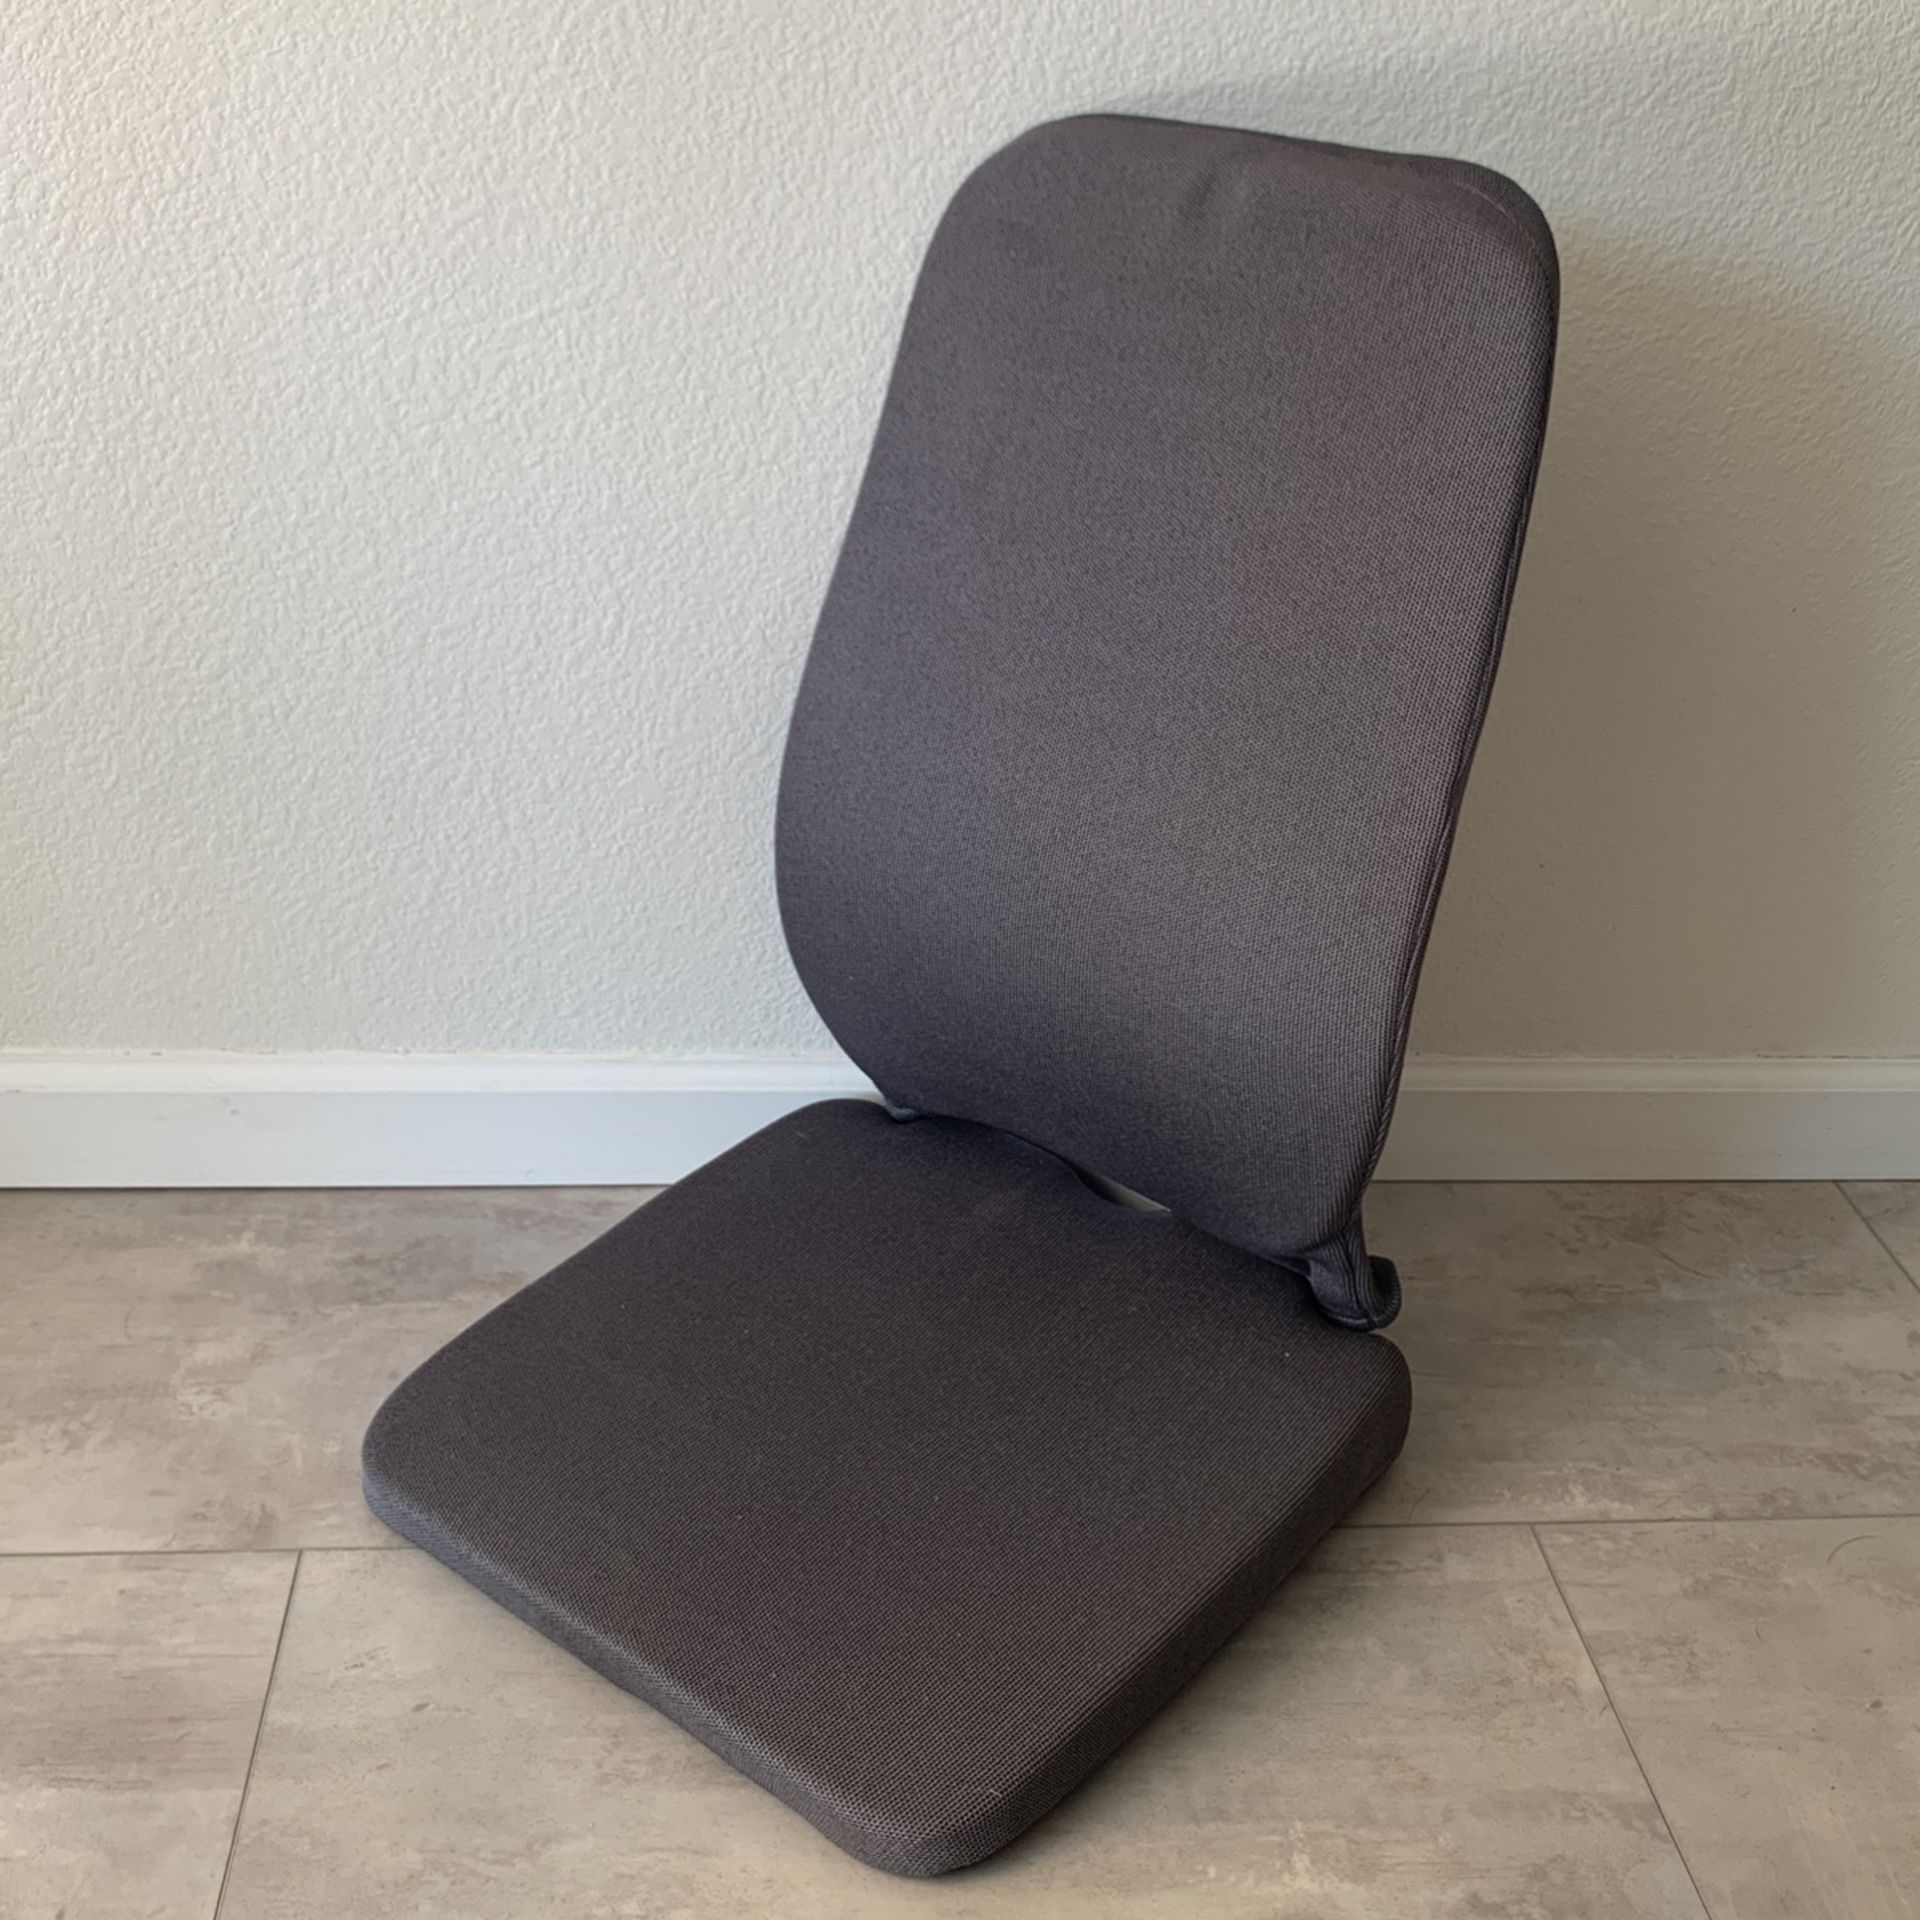 McCarty's Sacro-Ease Wedge Seat Cushion